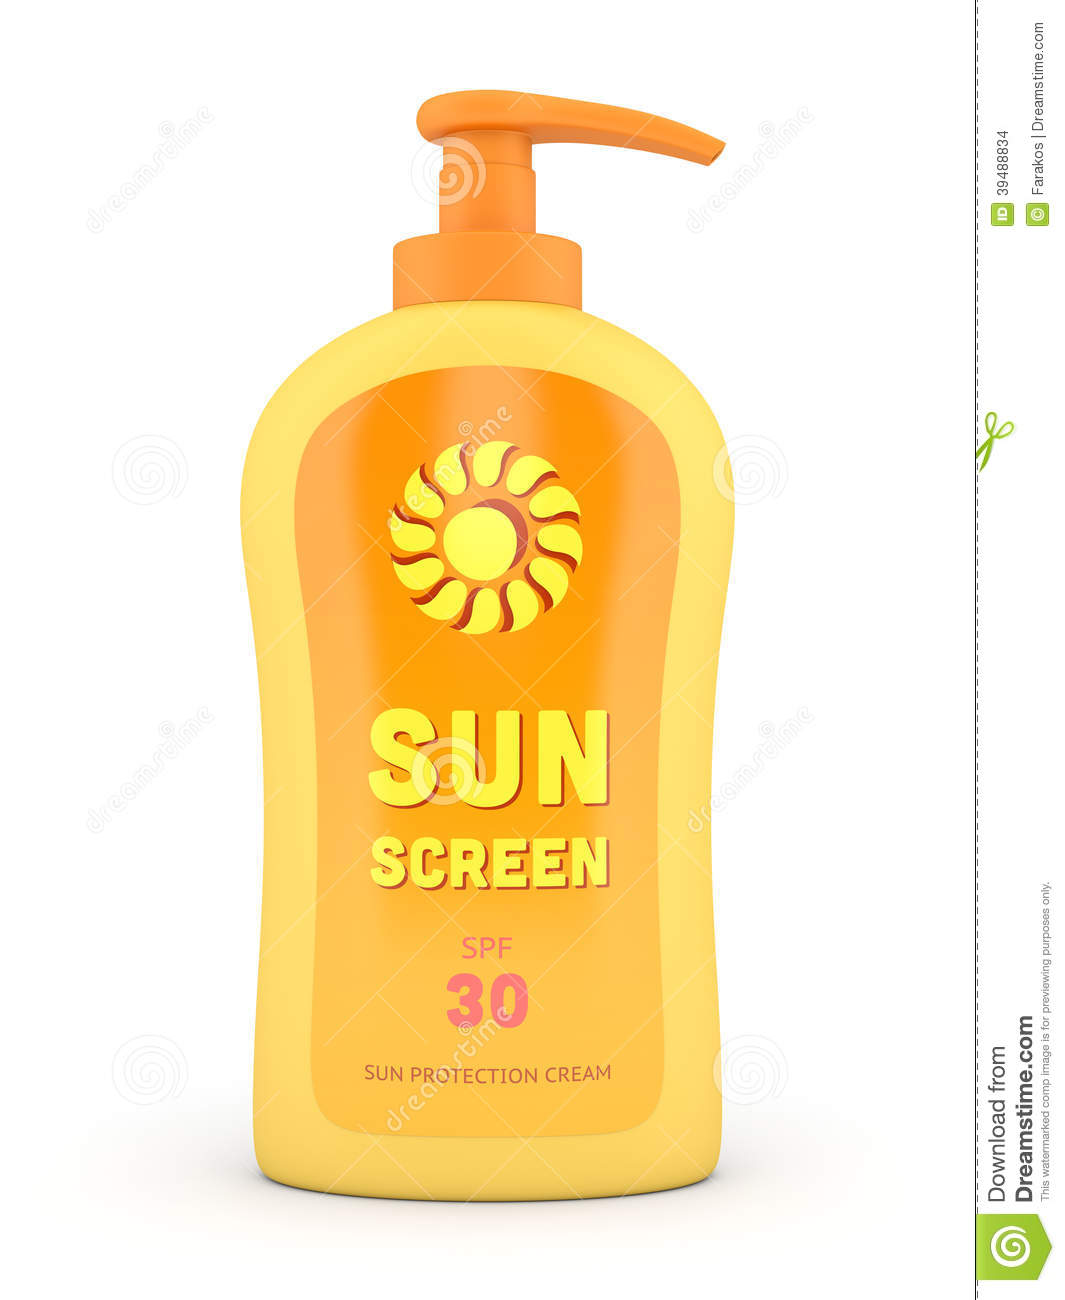 Clipart Sunscreen Sunscreen Bottle With